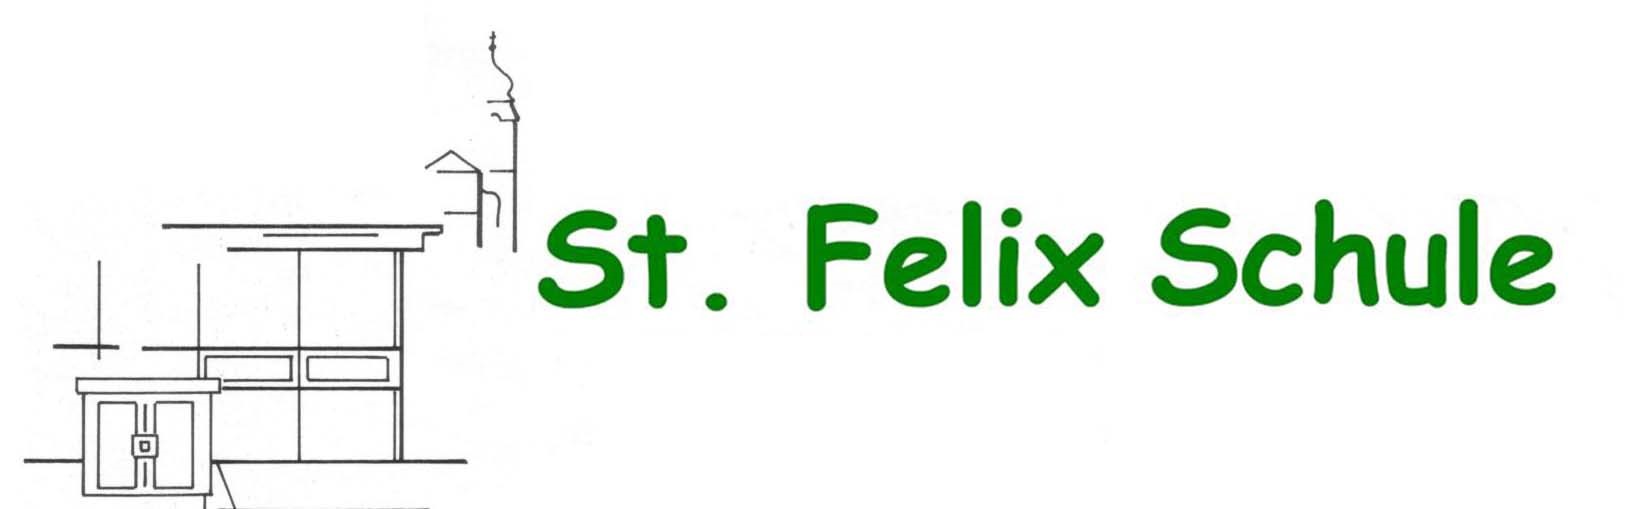 St. Felix Schule